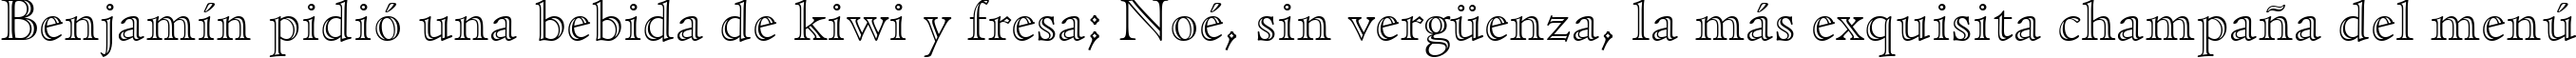 Пример написания шрифтом Cloister Open Face BT текста на испанском